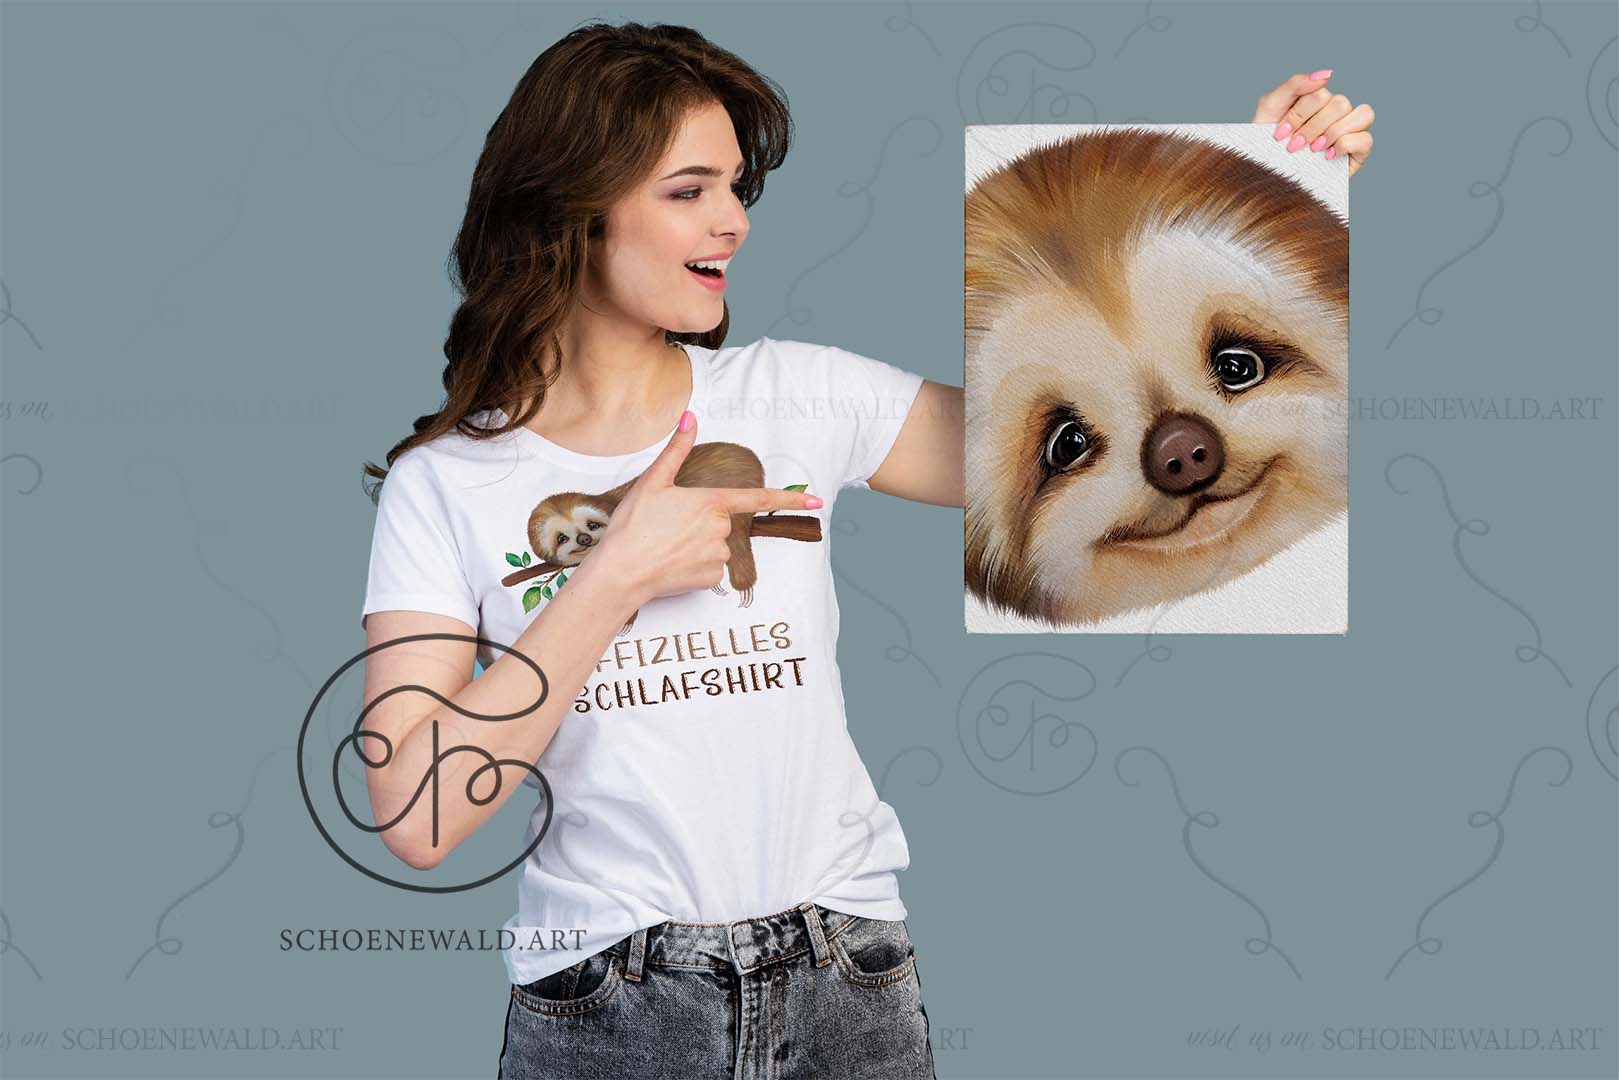 Offilcial sleepshirt with a cute sloth by Schoenewald.art